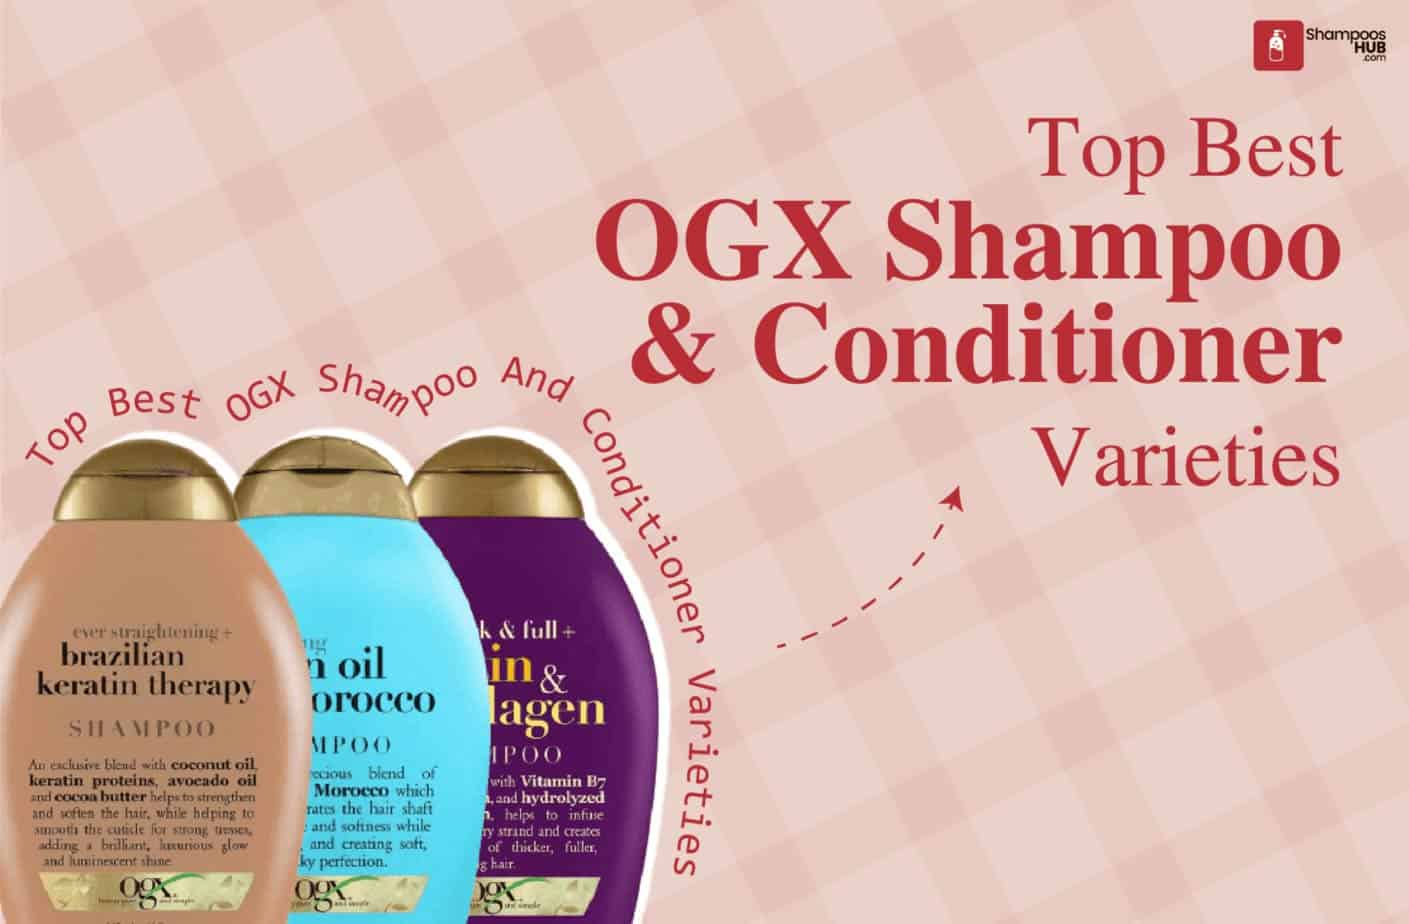 Best OGX Shampoo And Conditioner